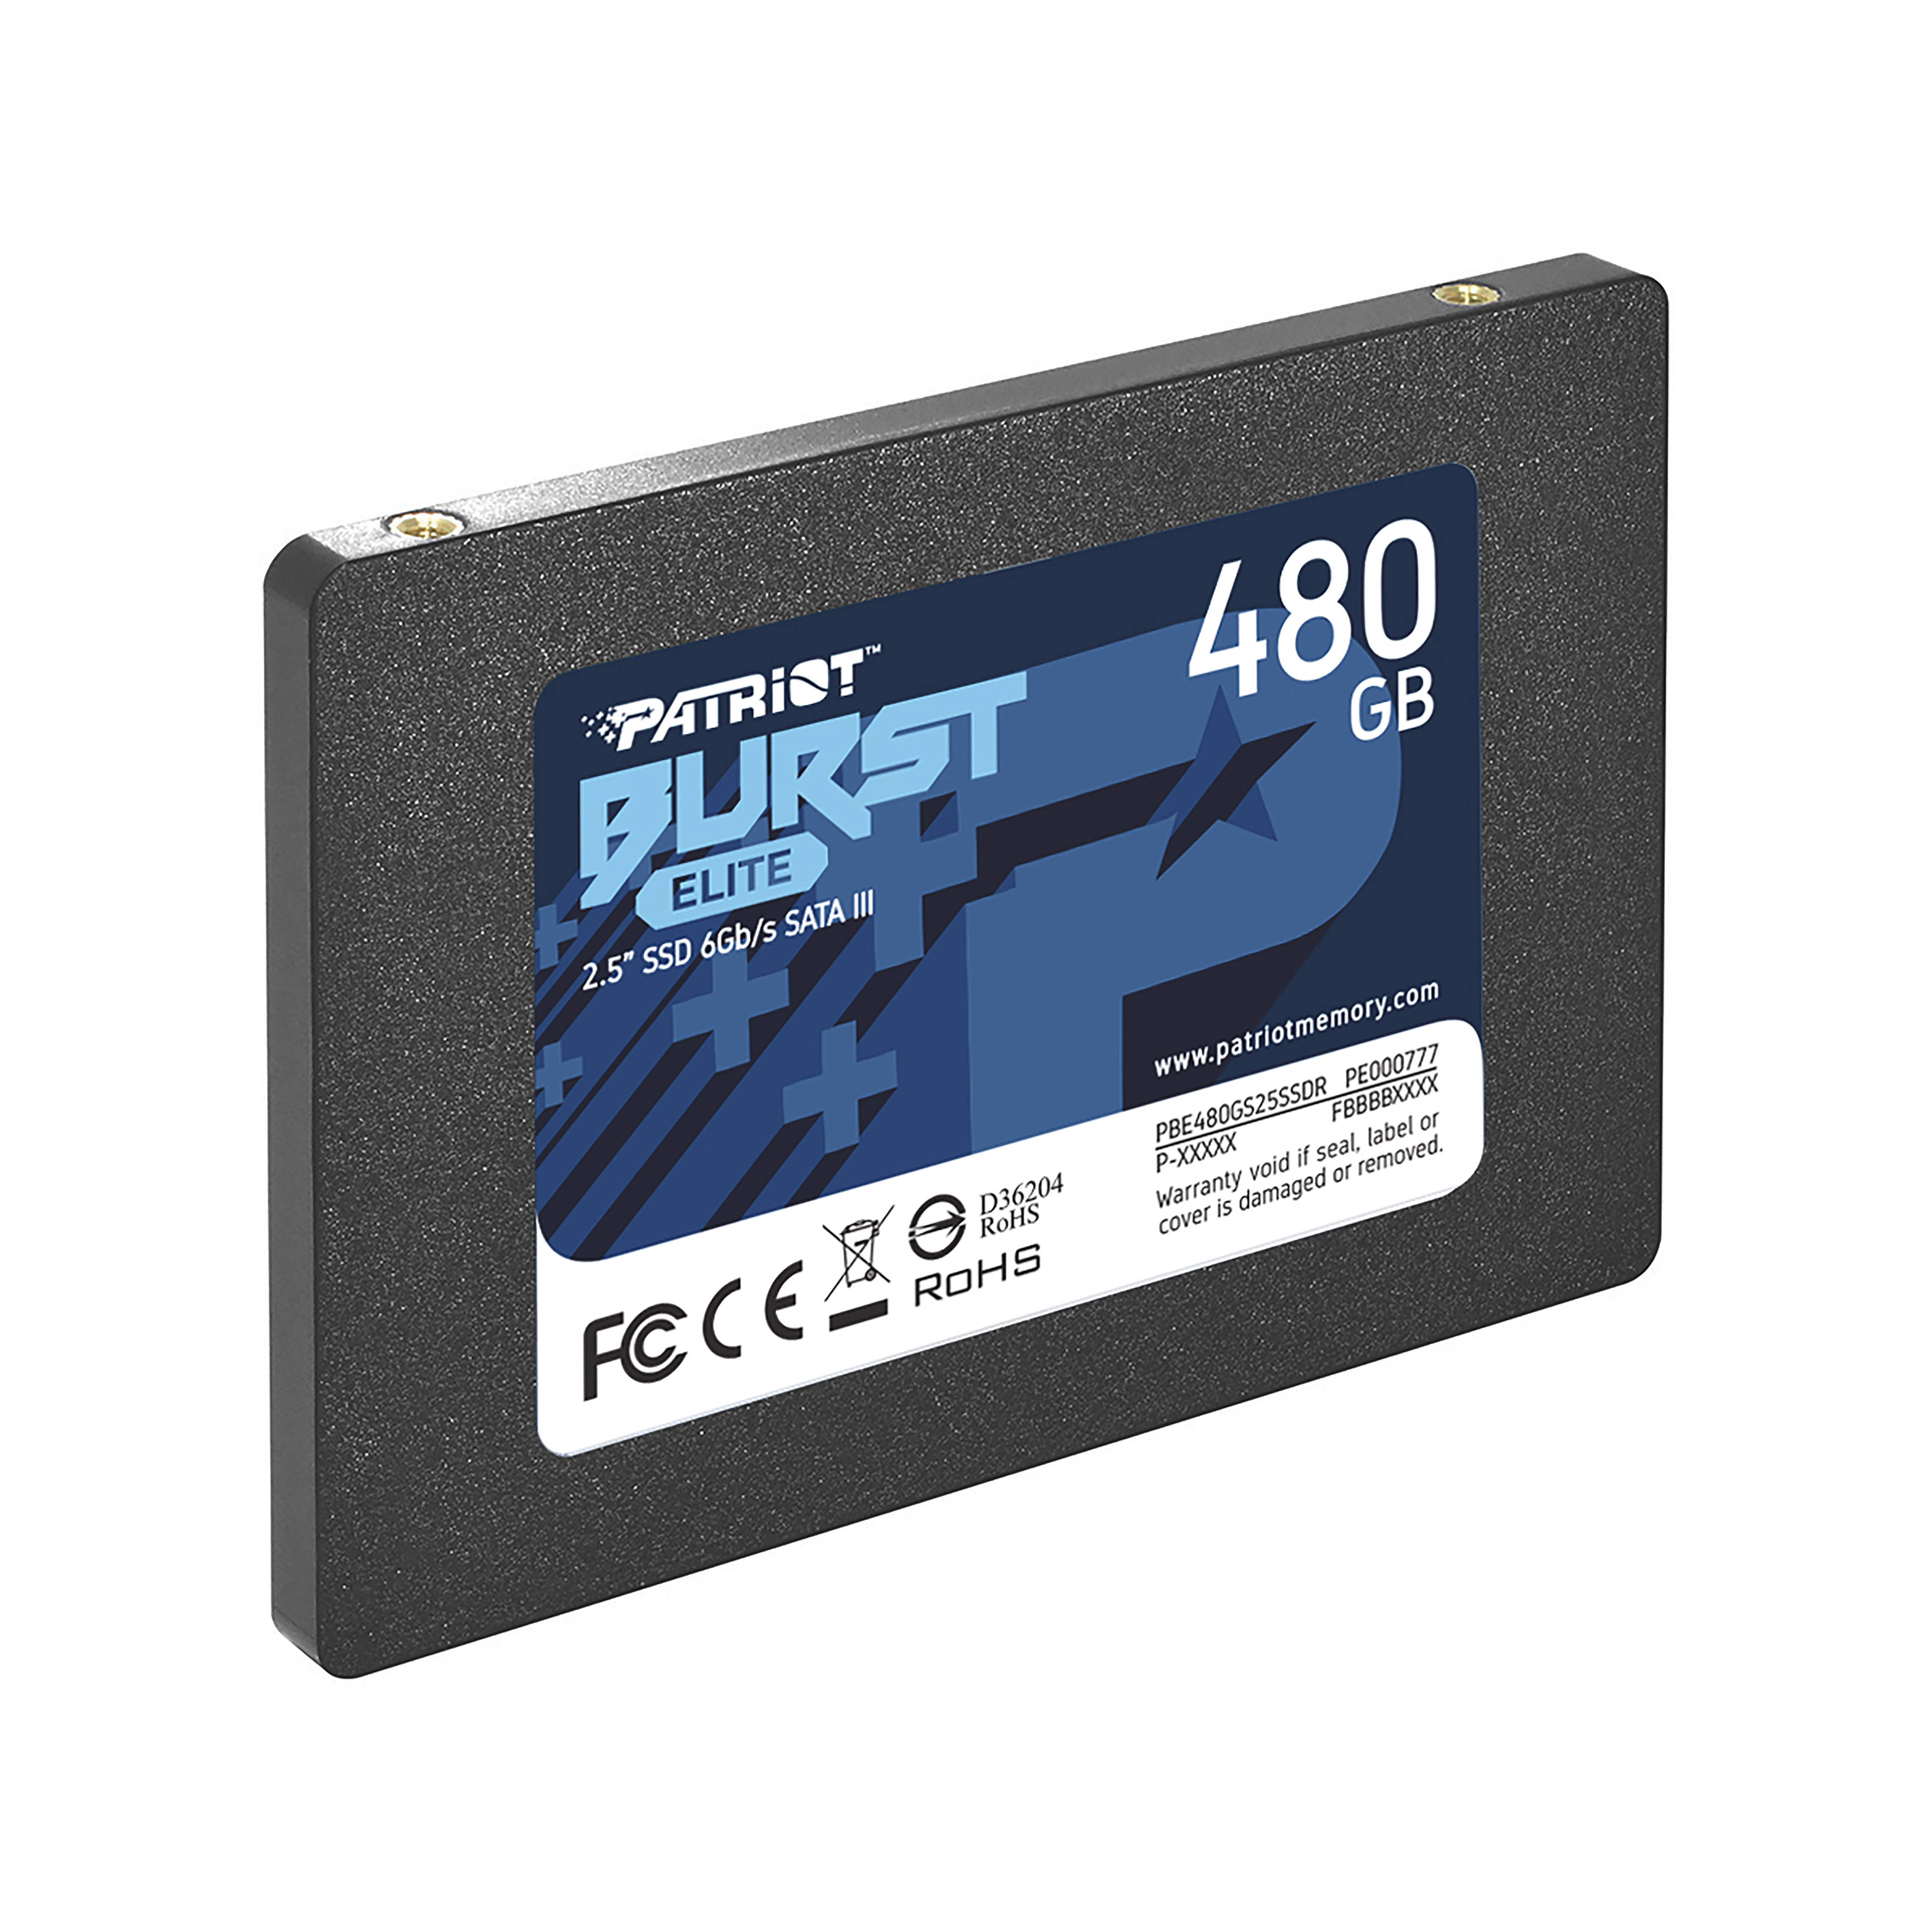 PATRIOT Burst Elite - SSD - 480 GB - intern - 2.5" (6.4 cm)